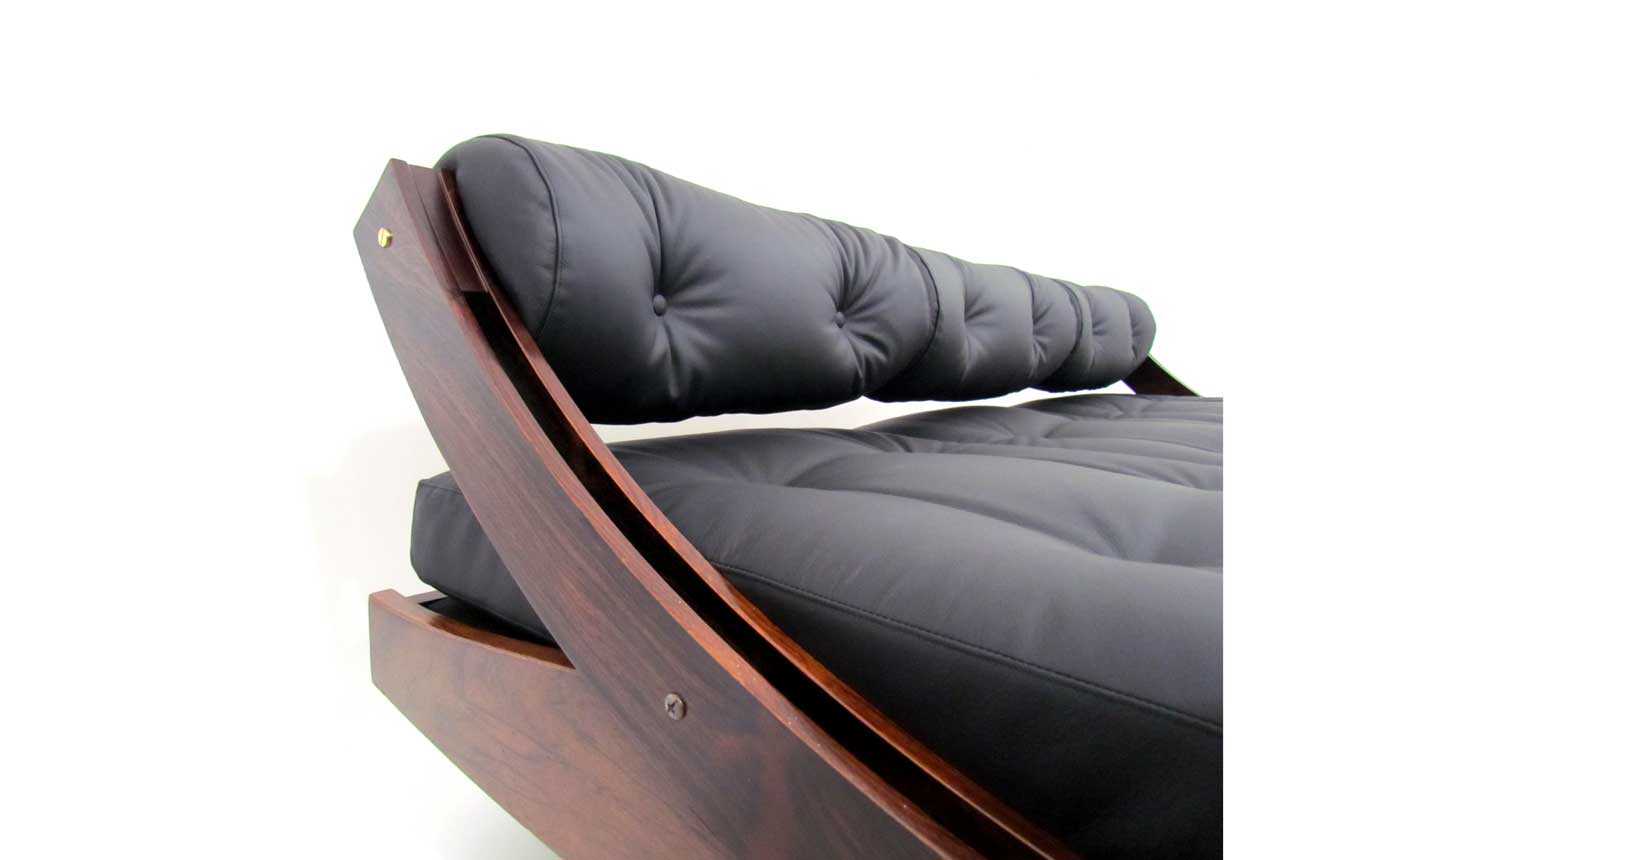 sormani gianni songia gs195 divano sofa sofabed leather vintage iconic design furniture